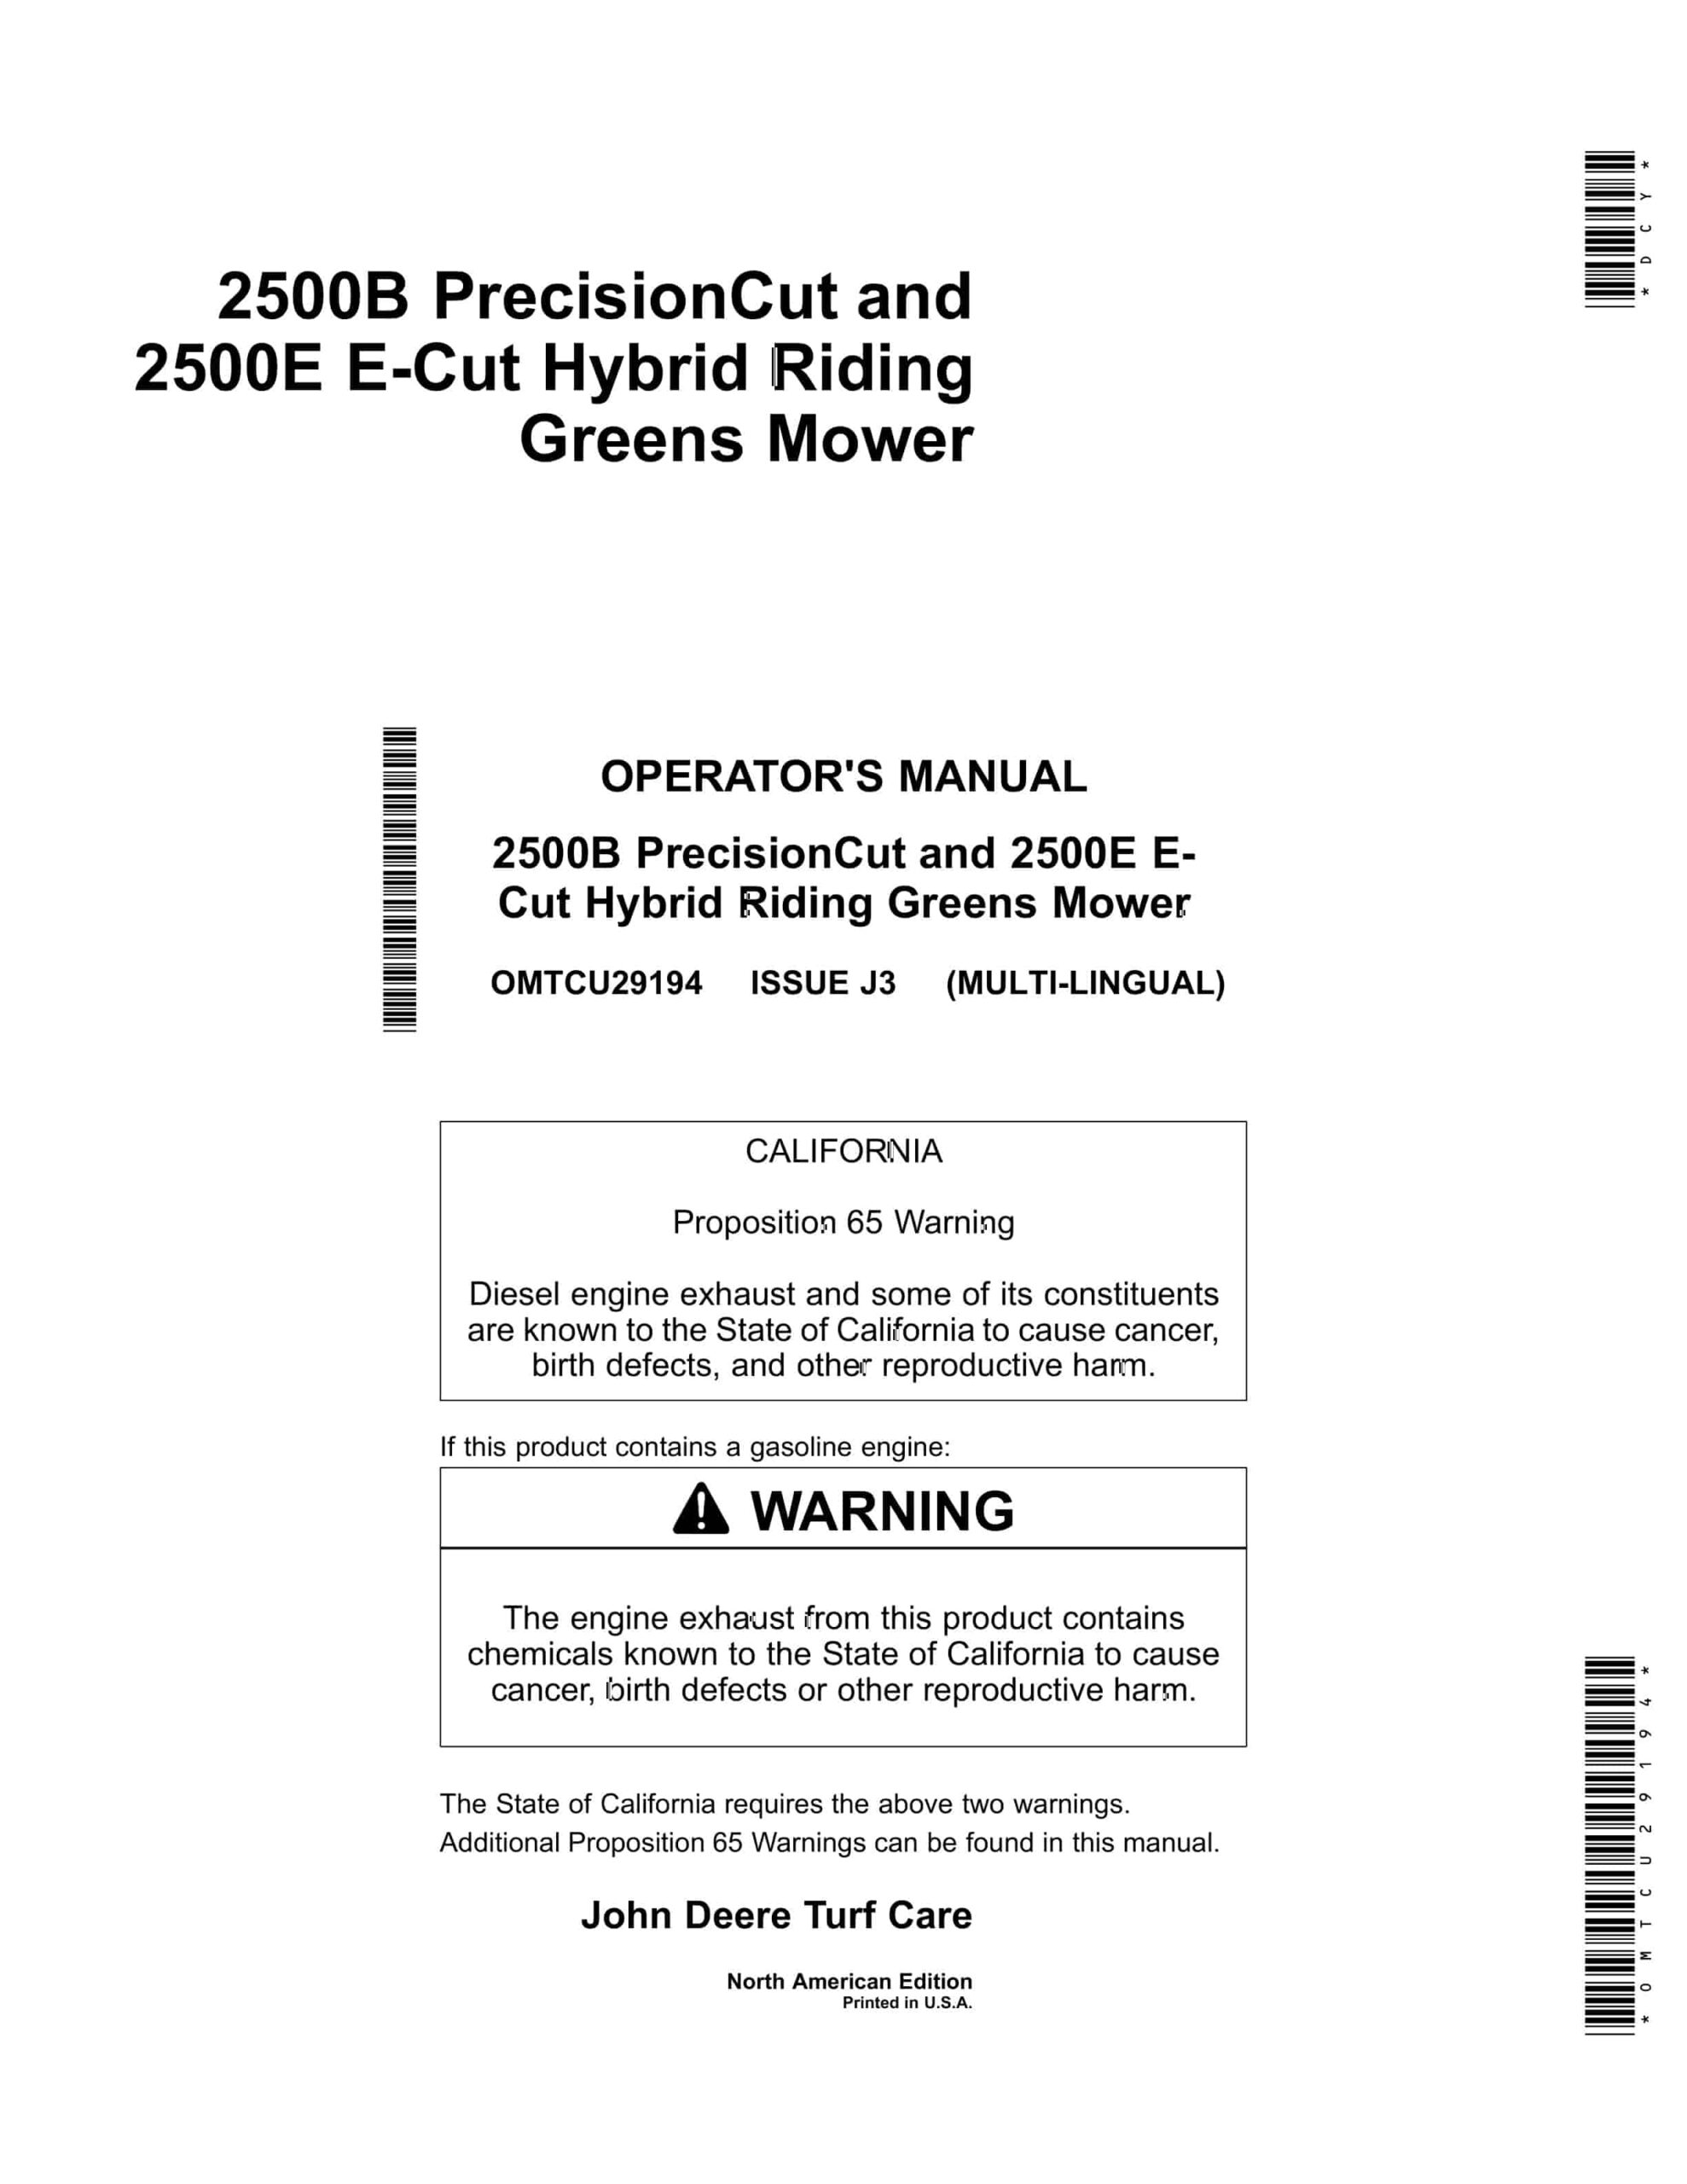 John Deere 2500B PrecisionCut and 2500E E Cut Hybrid Riding Greens Mower Operator Manual OMTCU29194-1